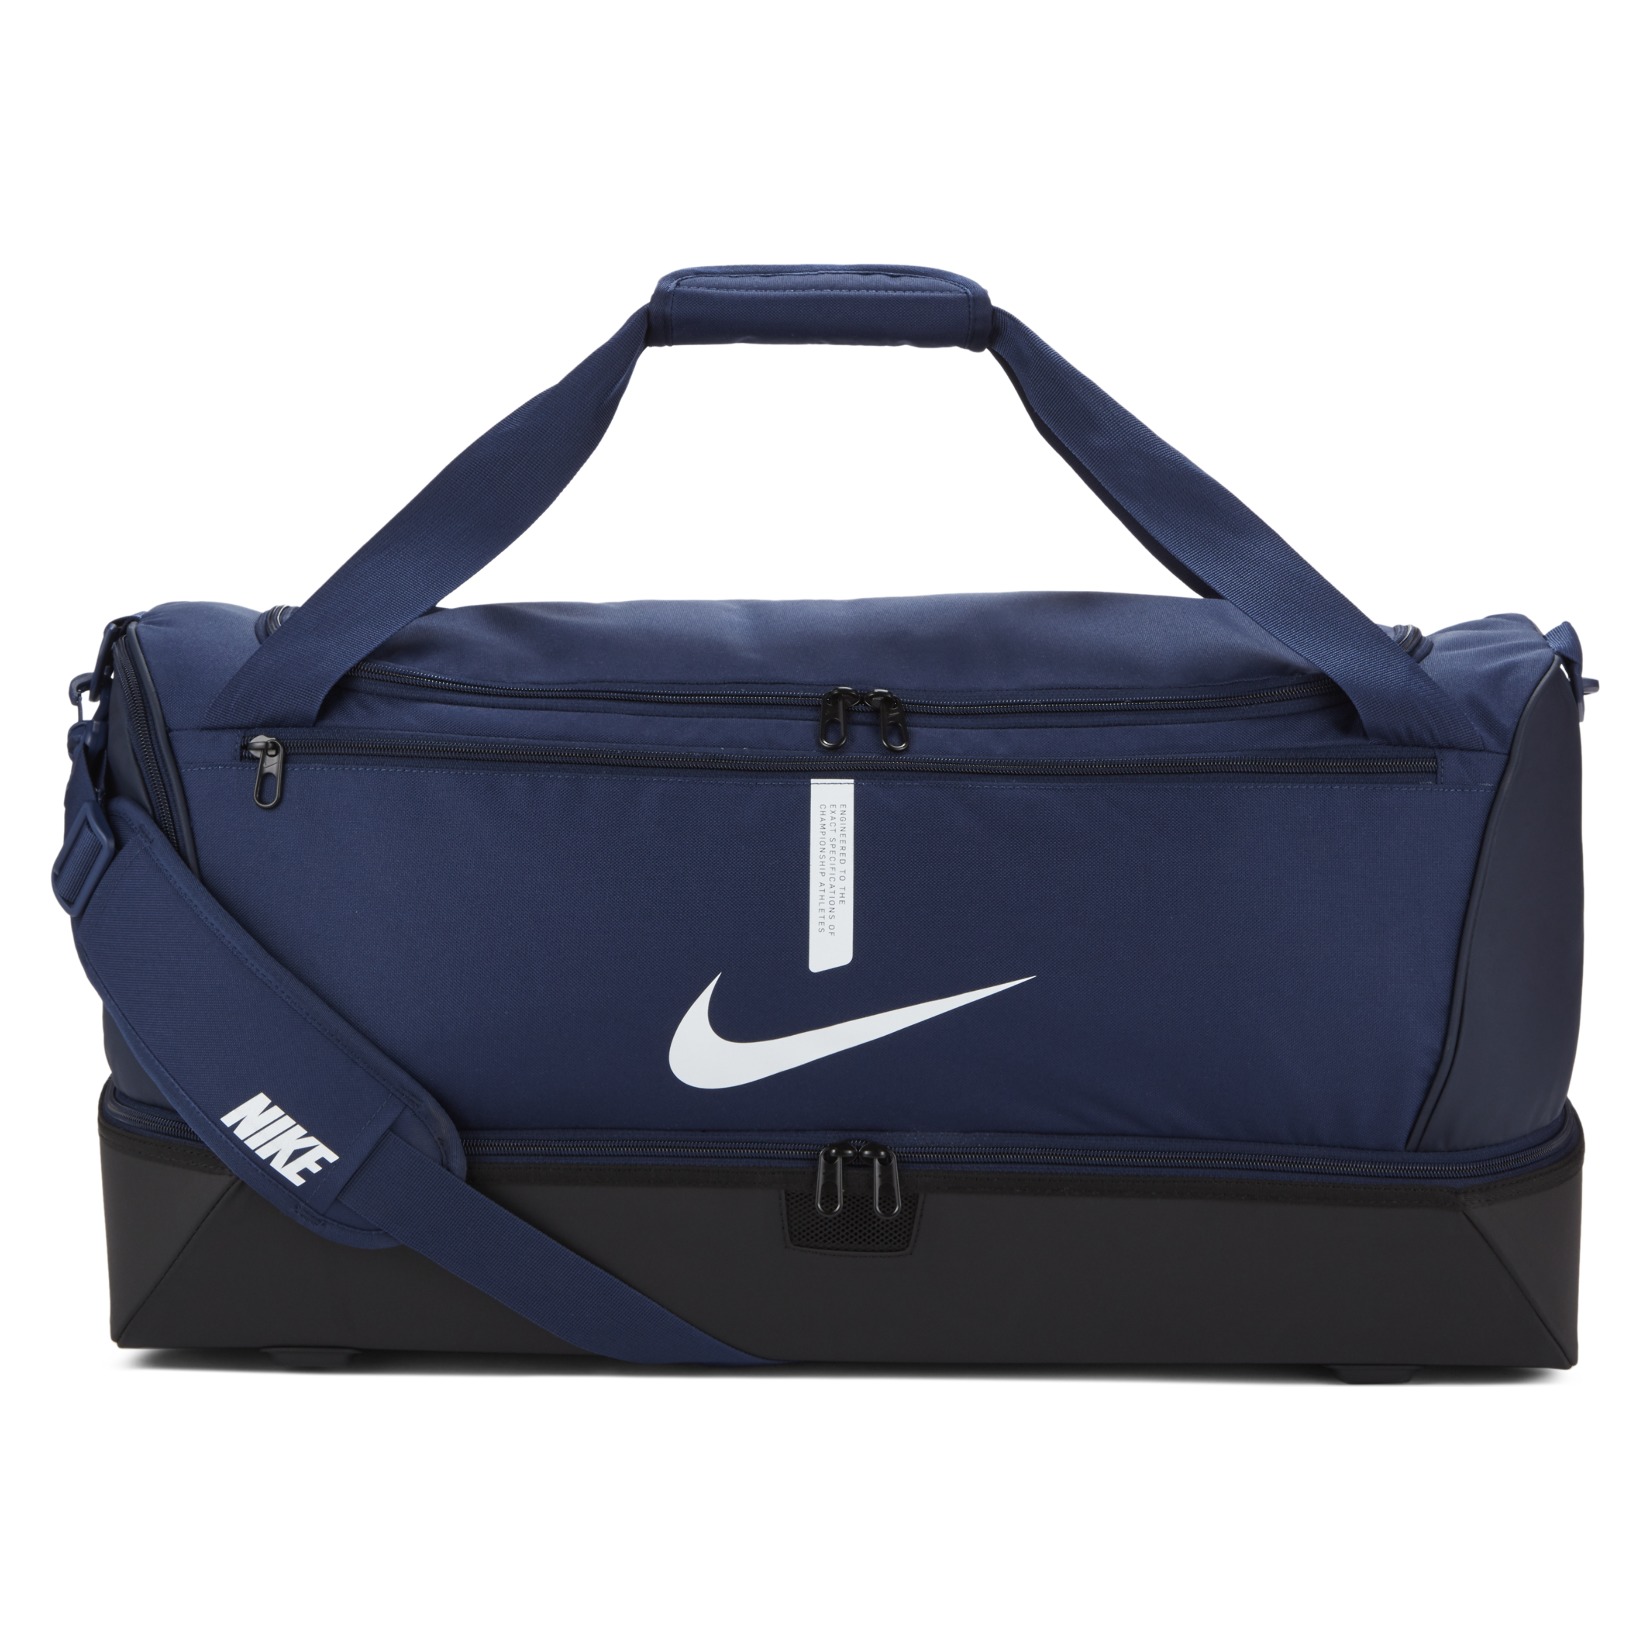 Nike Academy Team Hardcase Duffel Bag (Large) Midnight Navy-Black-White